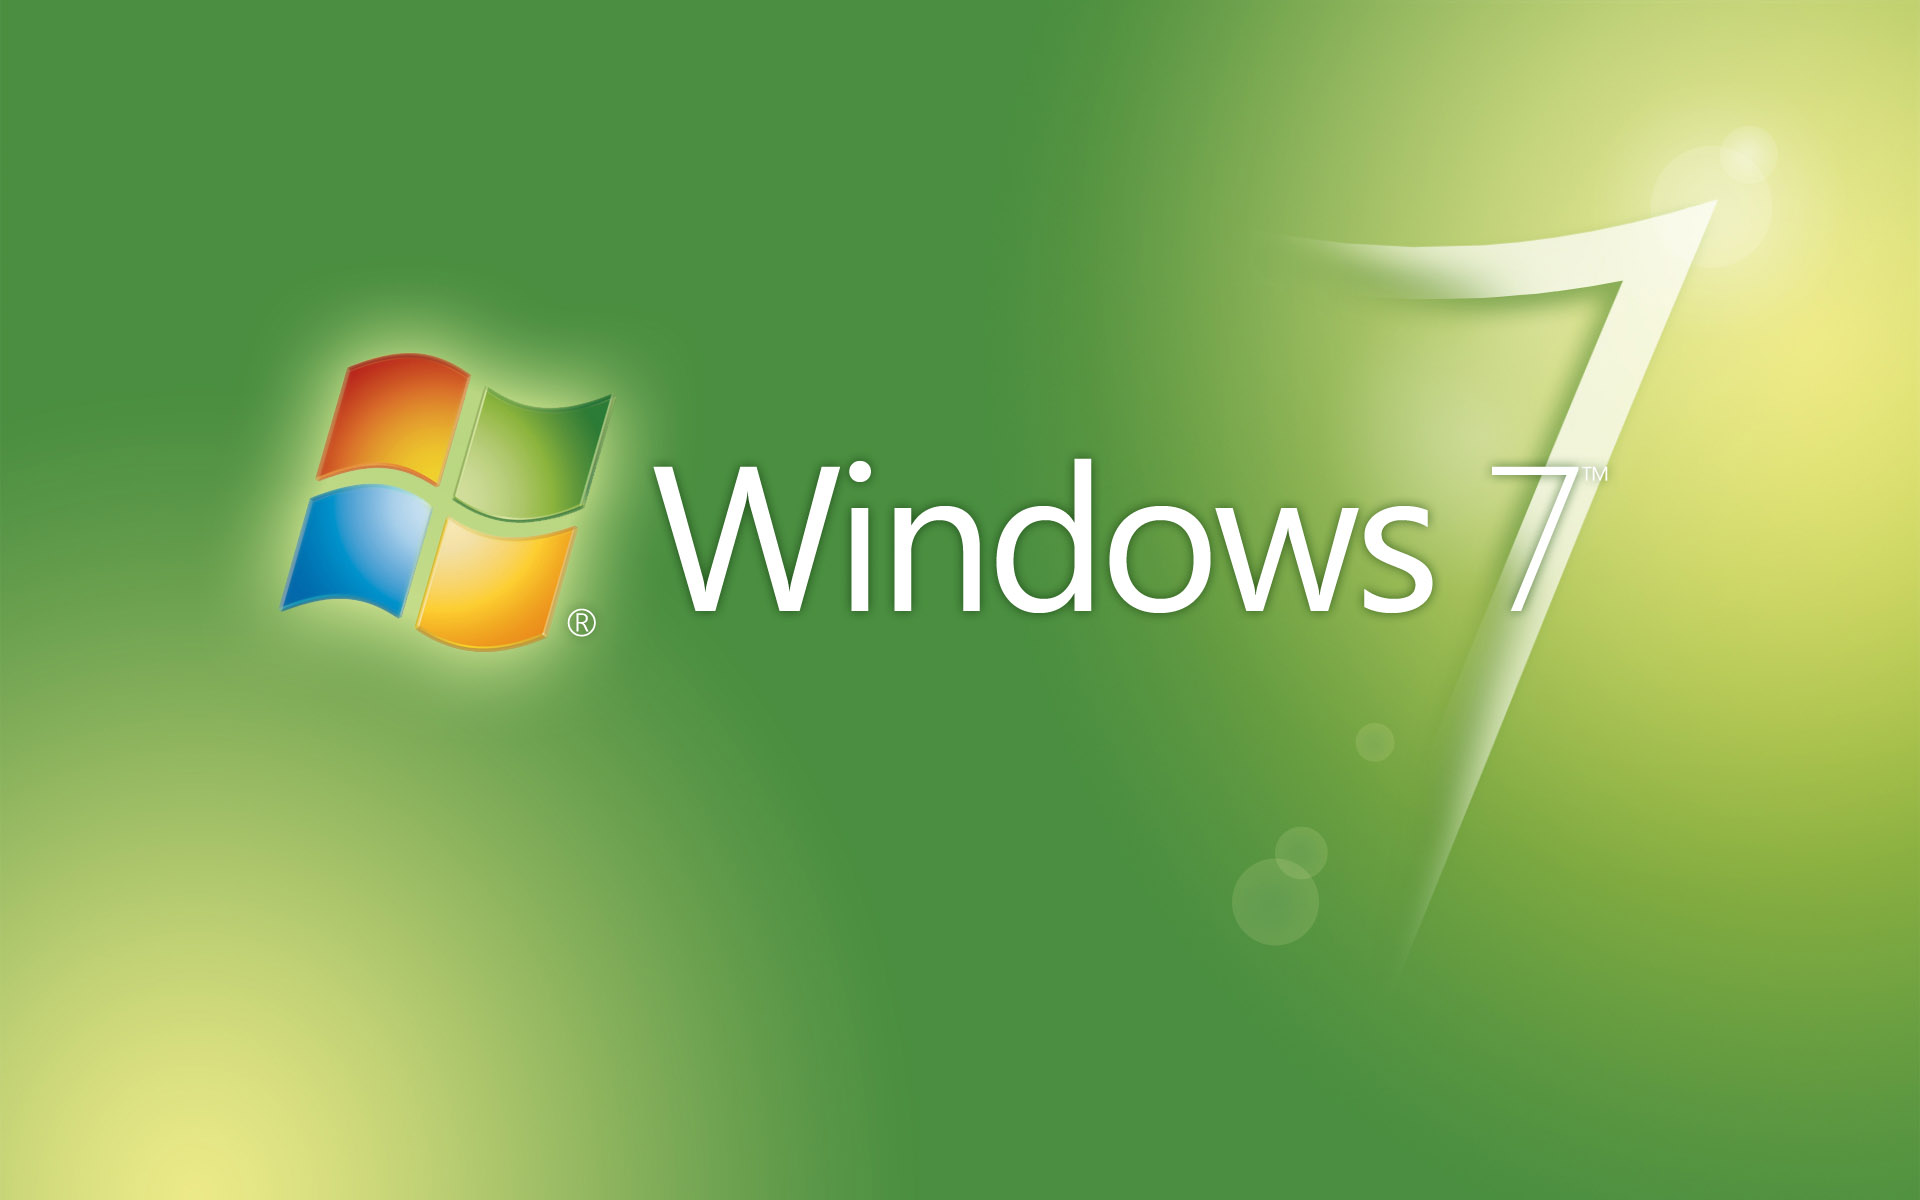 Tổng hợp 600 Free desktop backgrounds for windows 7 Đẹp mắt, thu hút